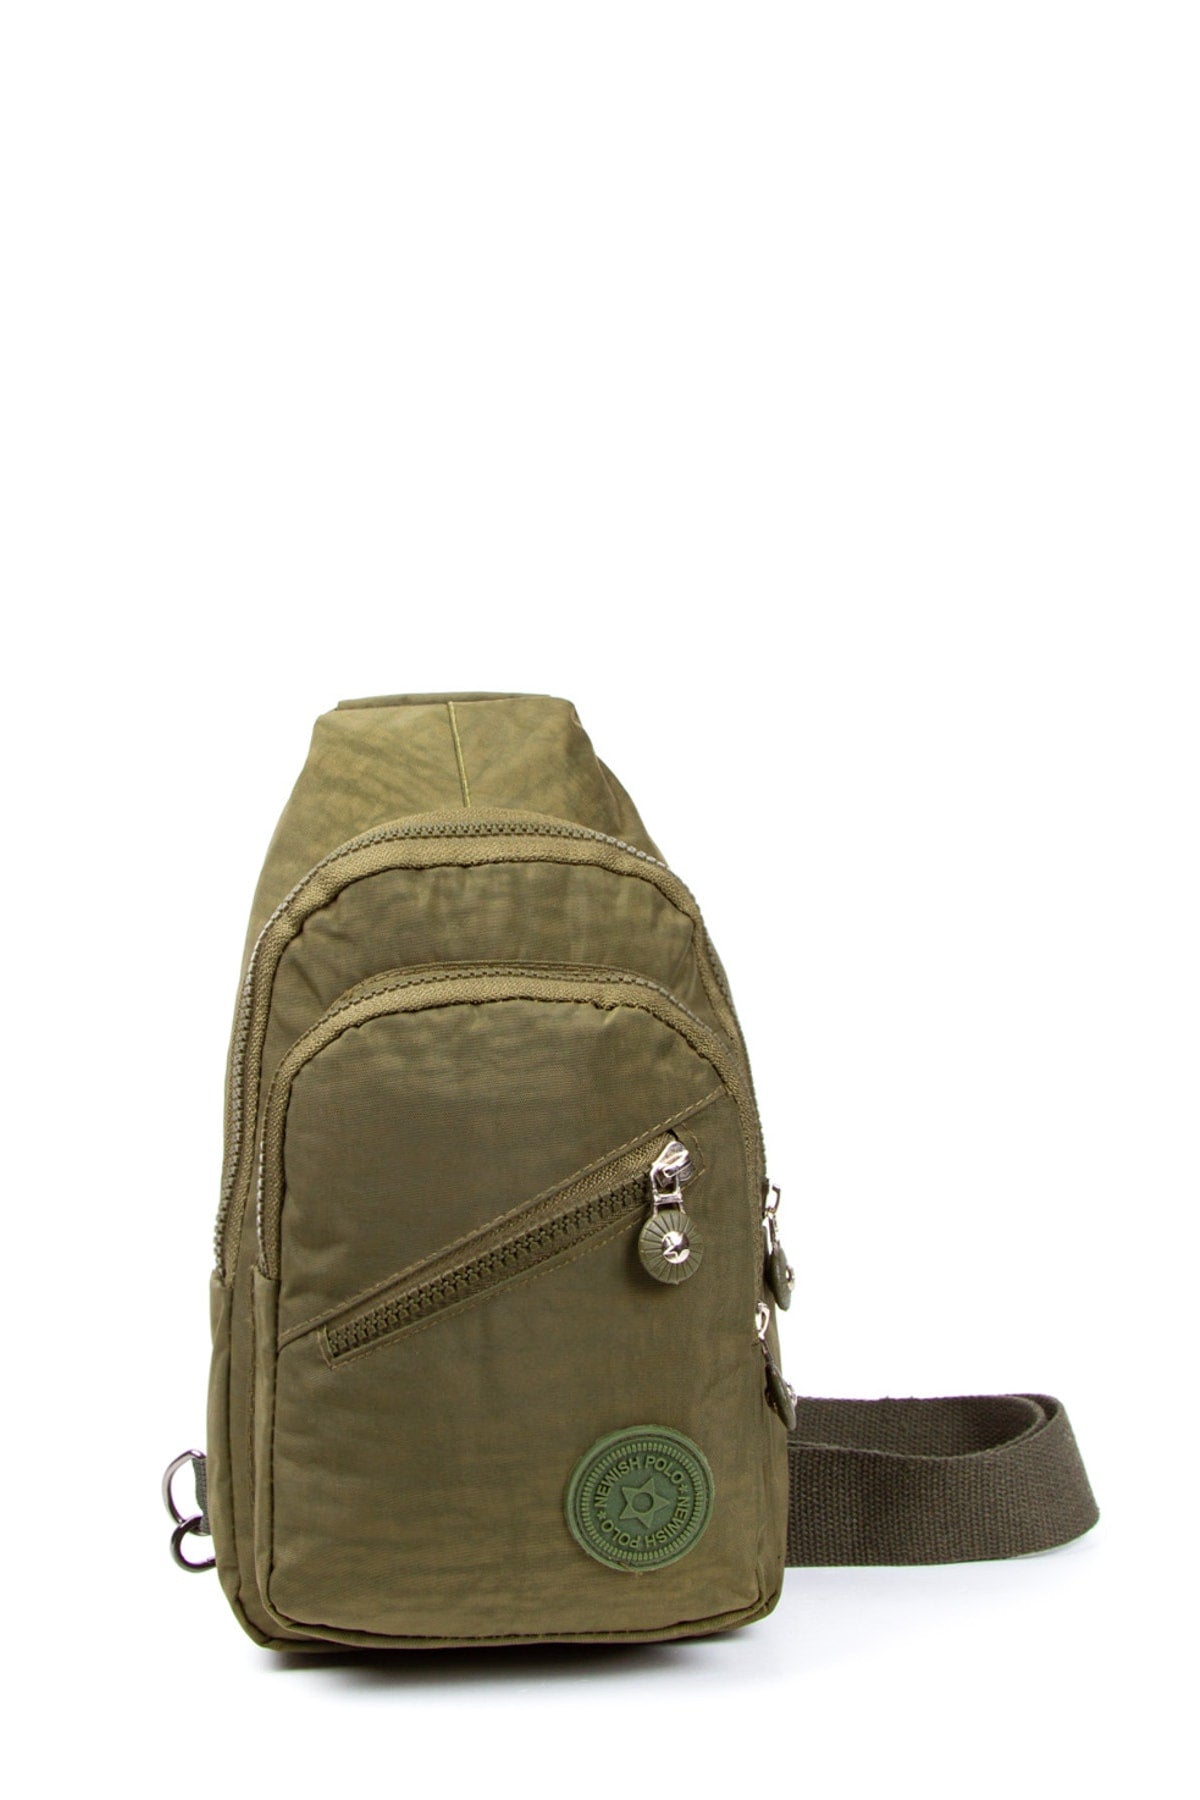 Unisex Crinkle Waterproof Bag, Crossbody Shoulder And Chest Bag, Body Bag, Khaki